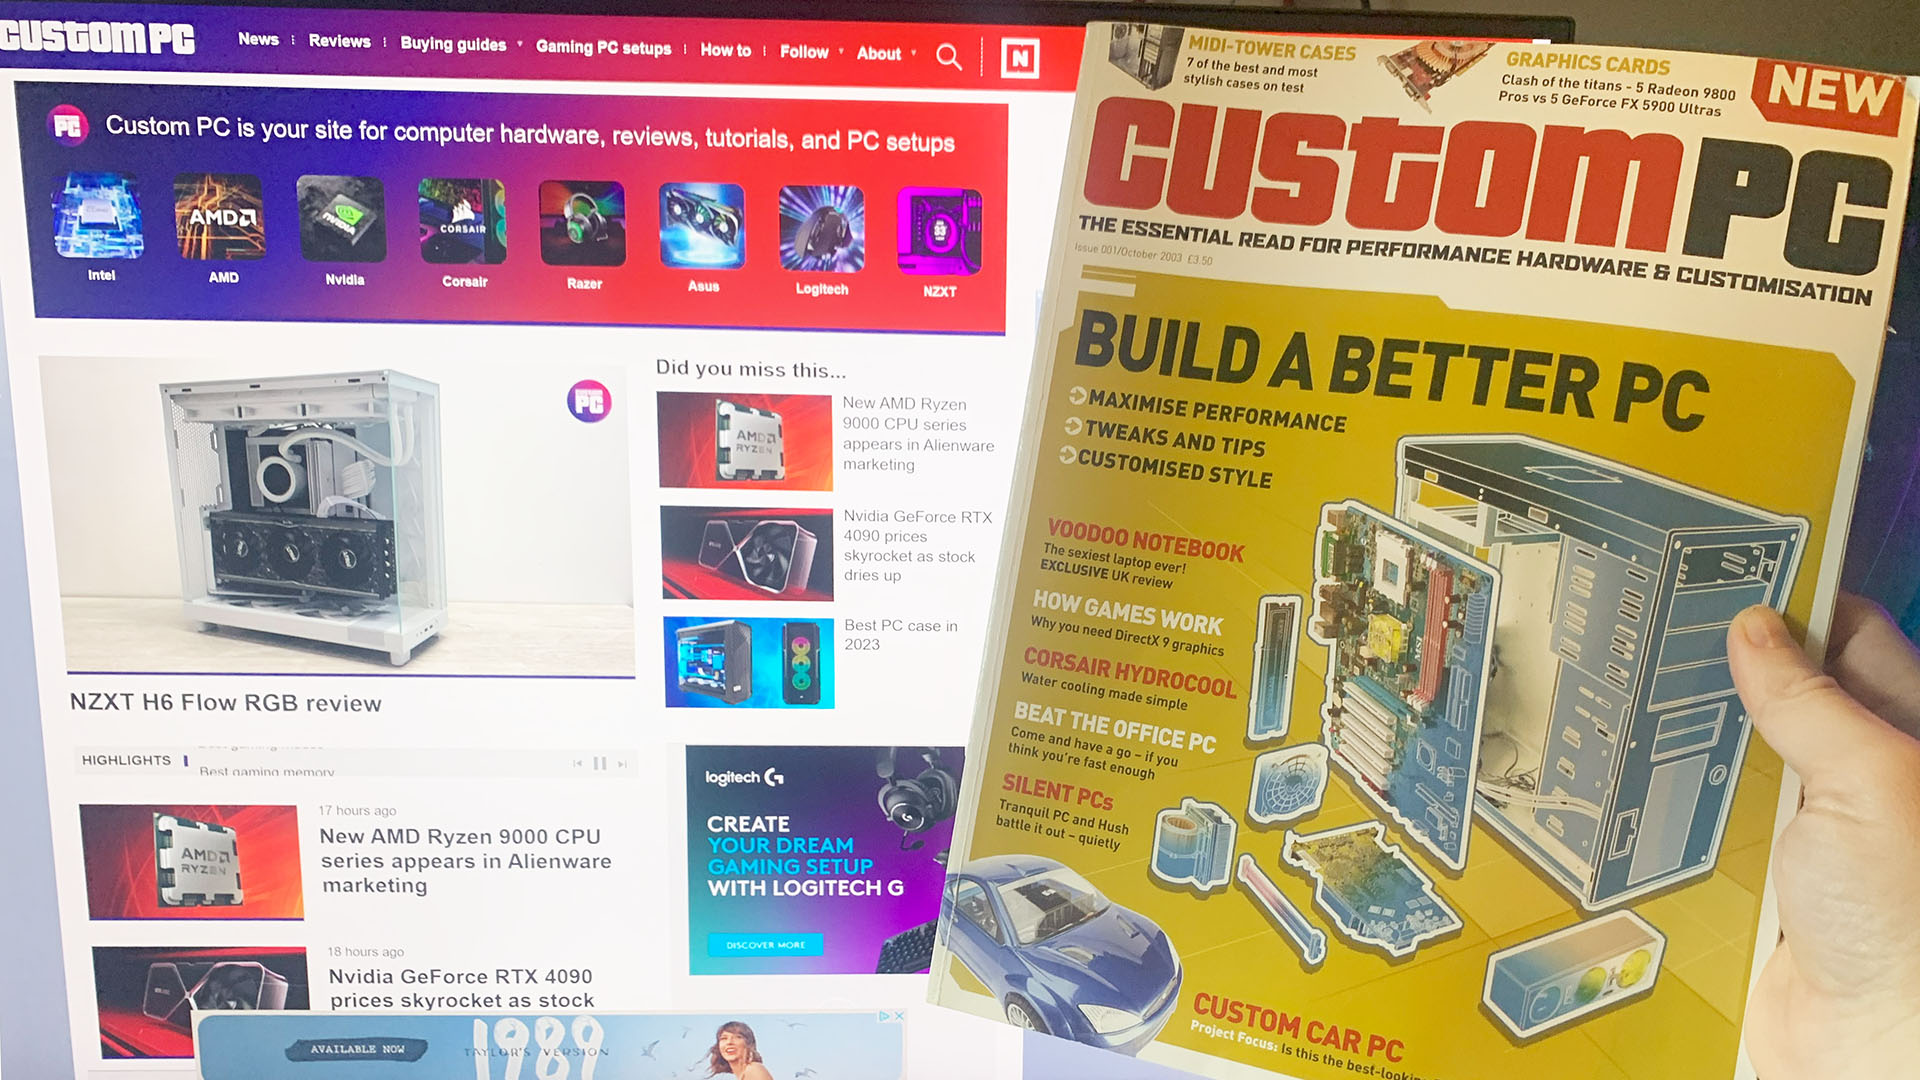 Custom PC magazine Issue 1 with website